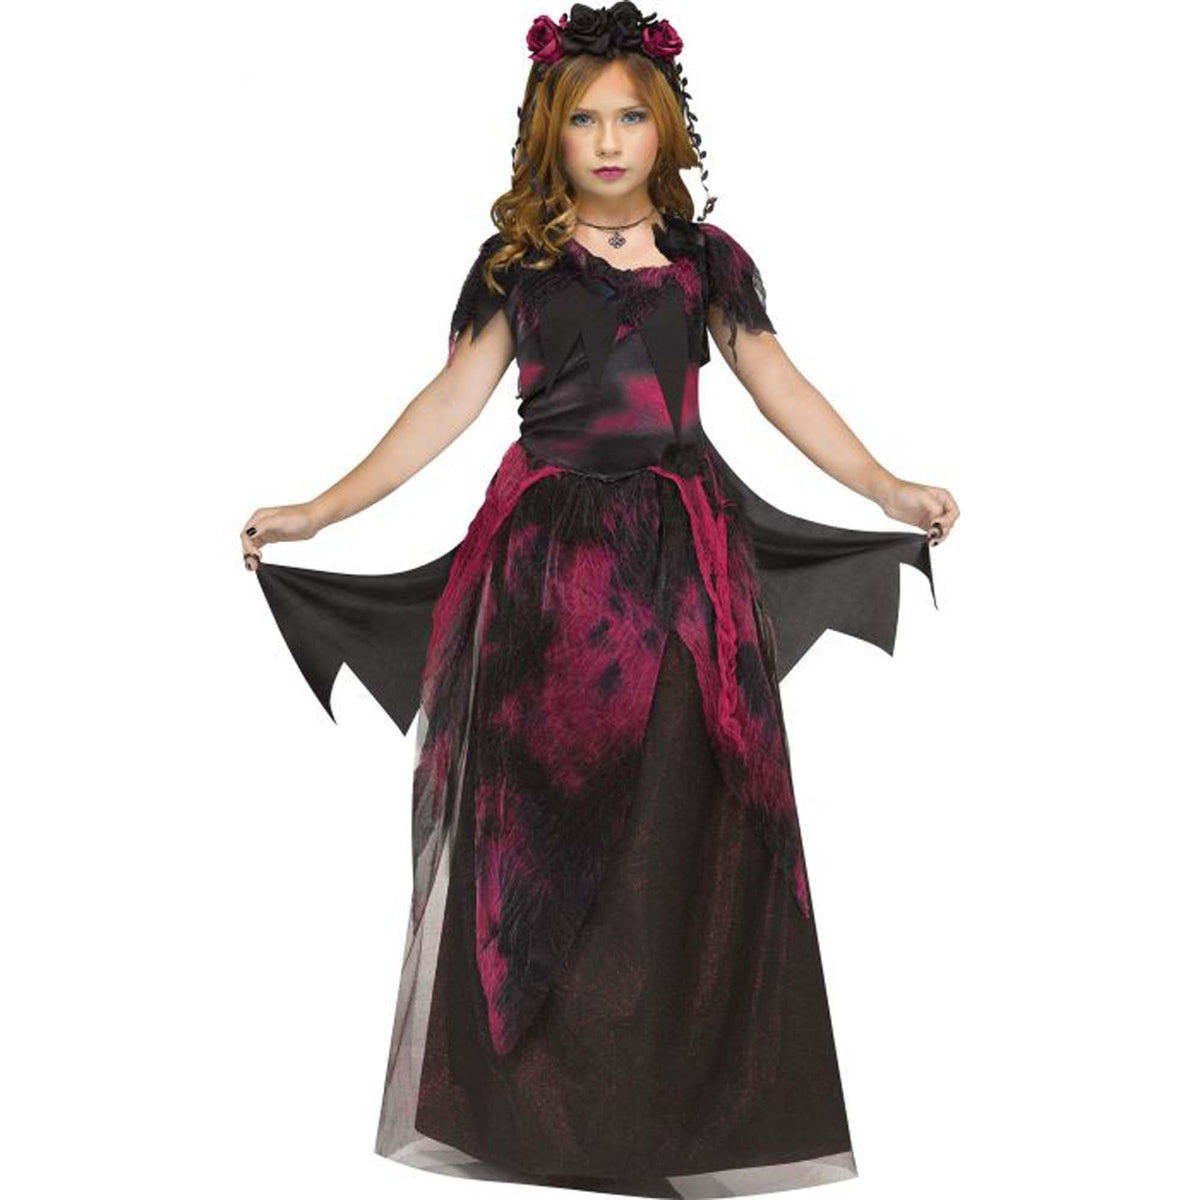 FUN WORLD Costumes Twilight Fairy Costume for Kids, Black and Purple Dress